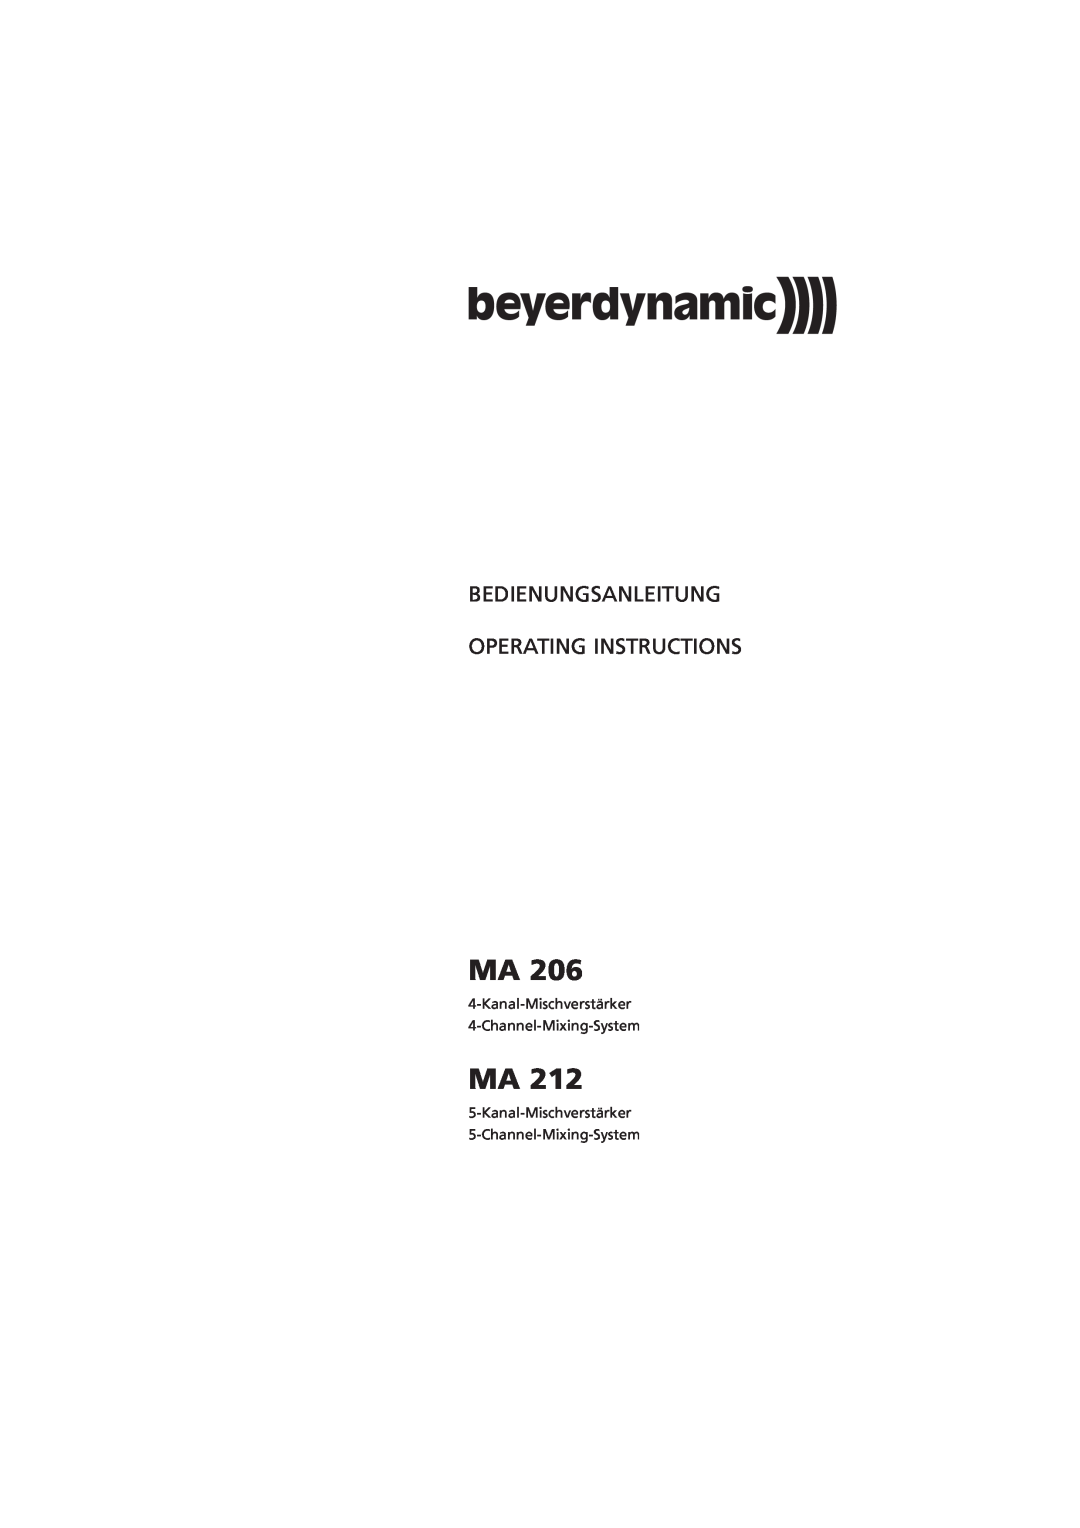 Beyerdynamic MA 206 manual Bedienungsanleitung Operating Instructions, Kanal-Mischverstärker 4-Channel-Mixing-System 